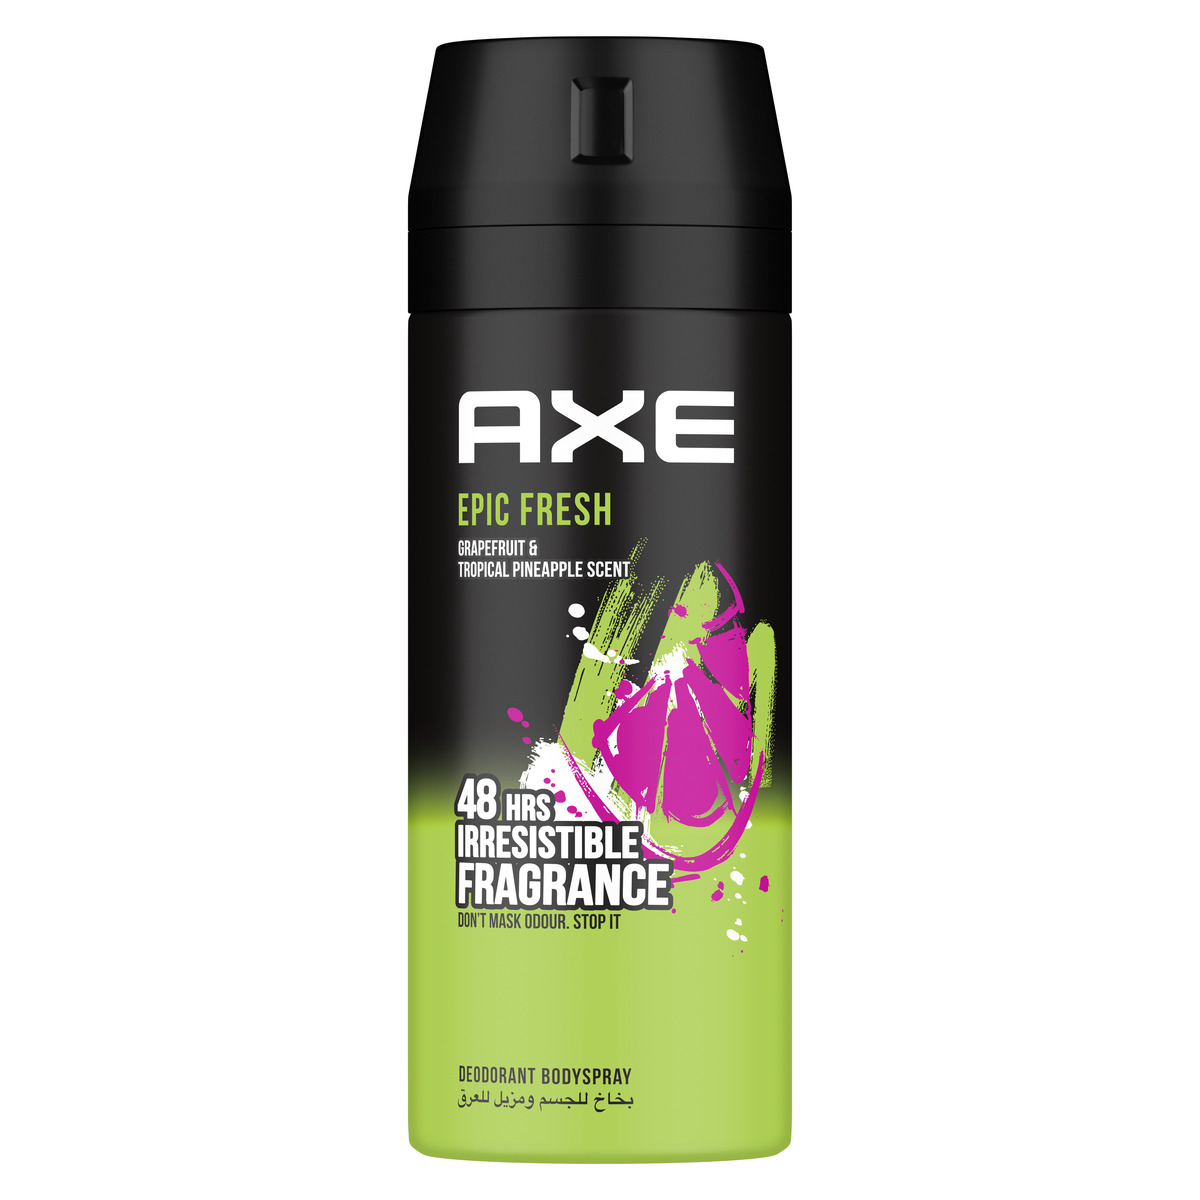 Axe Epic Fresh Grapefruit & Tropical Pineapple Scent Deodorant Spray, 150 ml